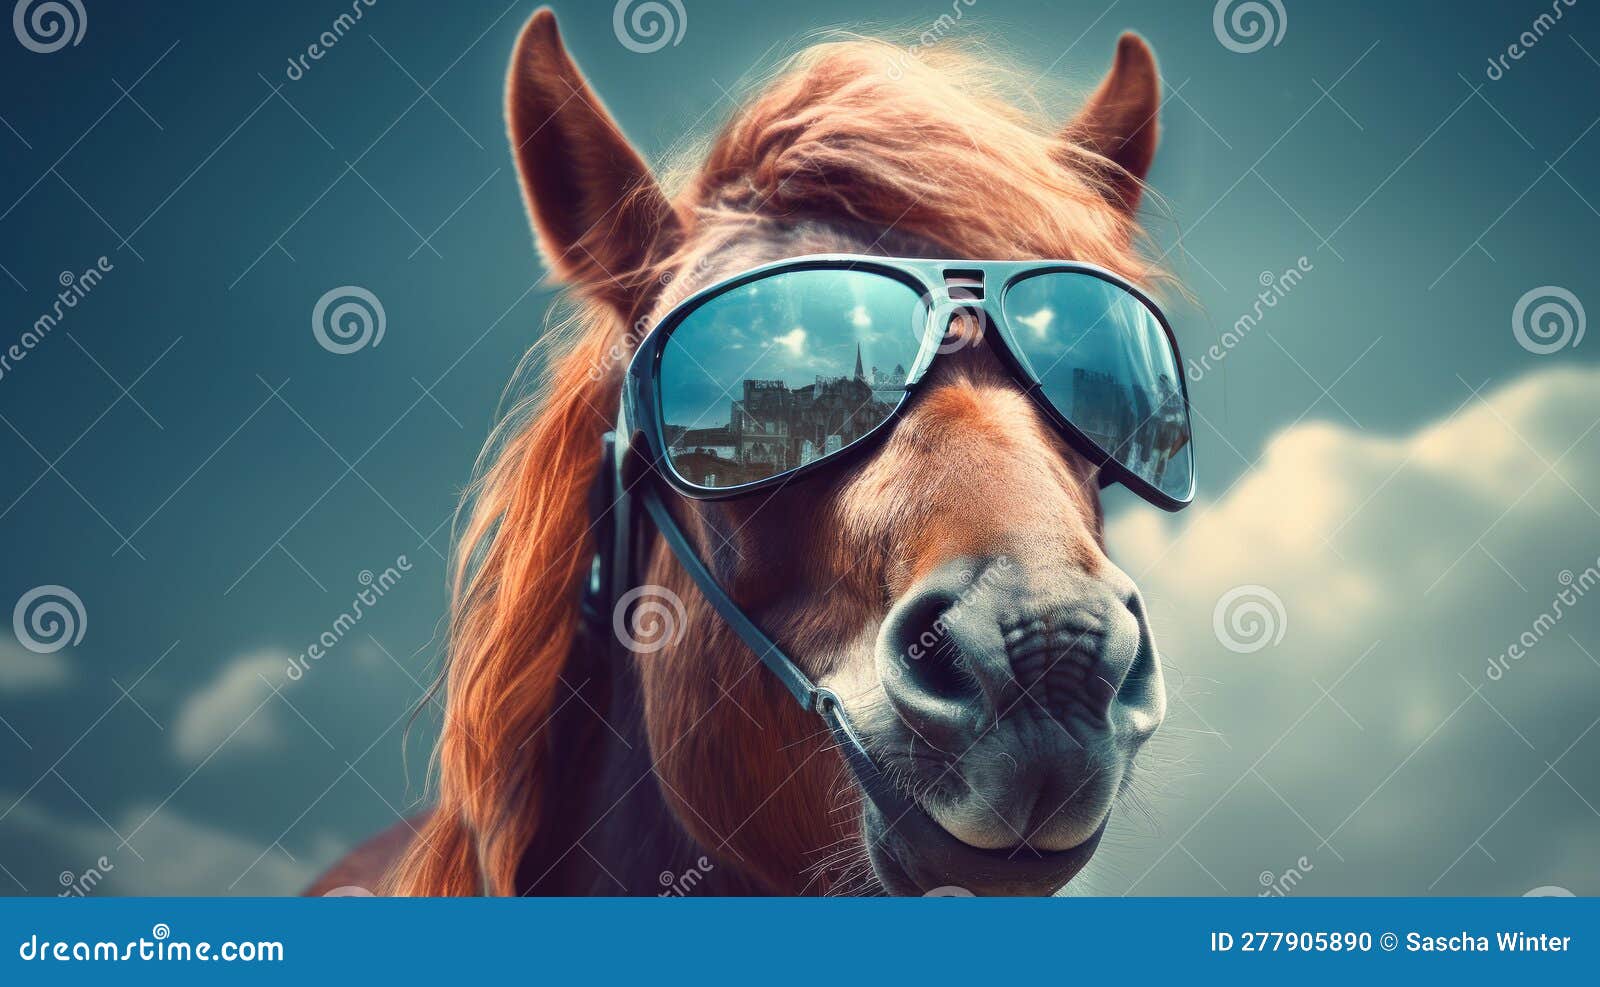 Top 195+ horse sunglasses best